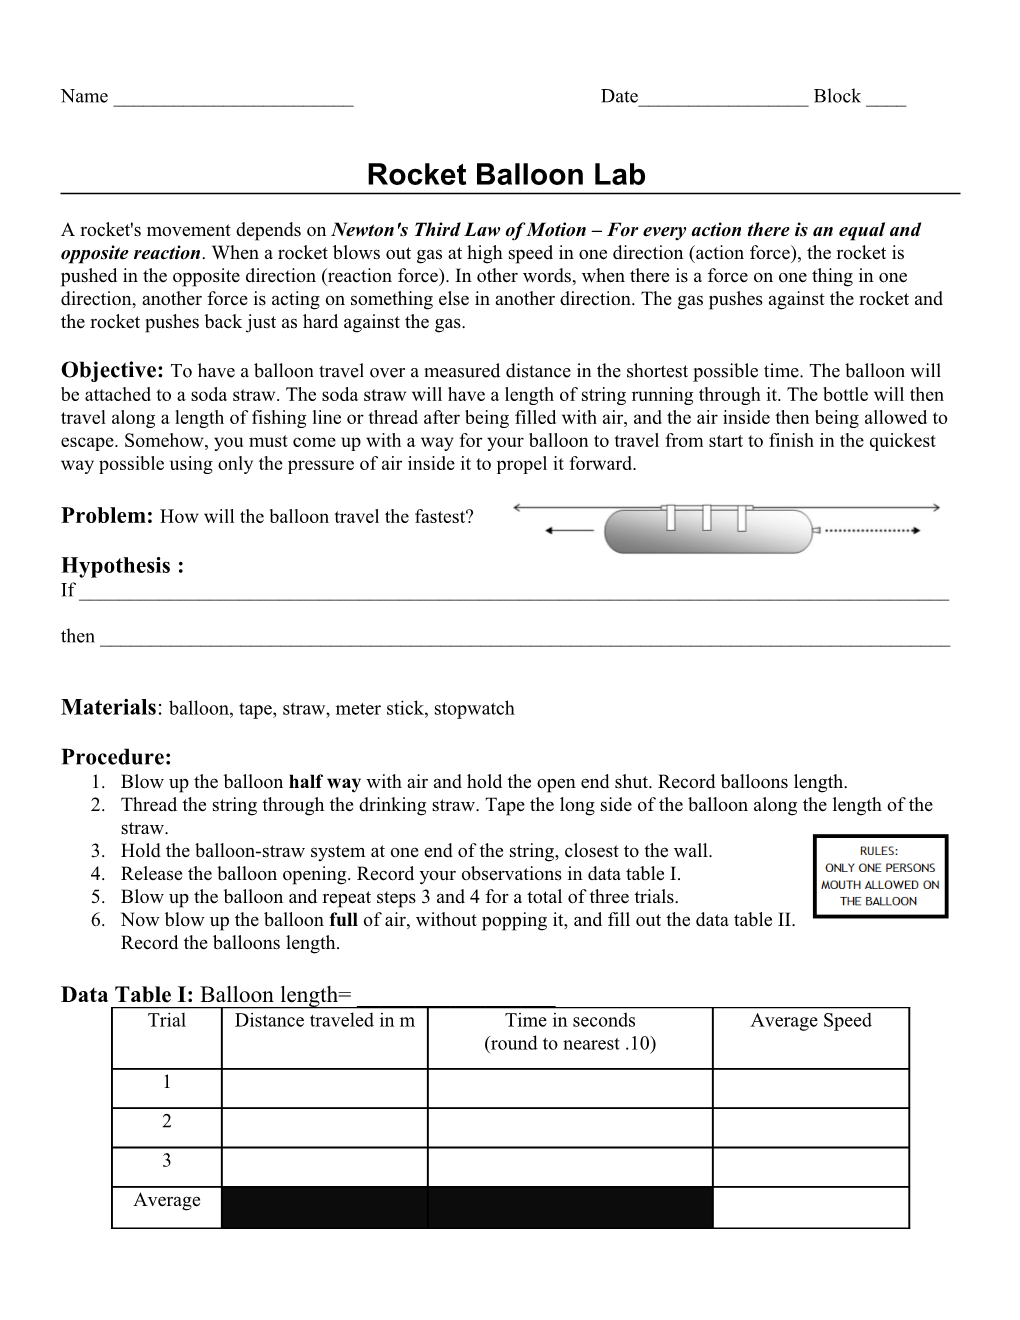 Rocket Balloon Lab